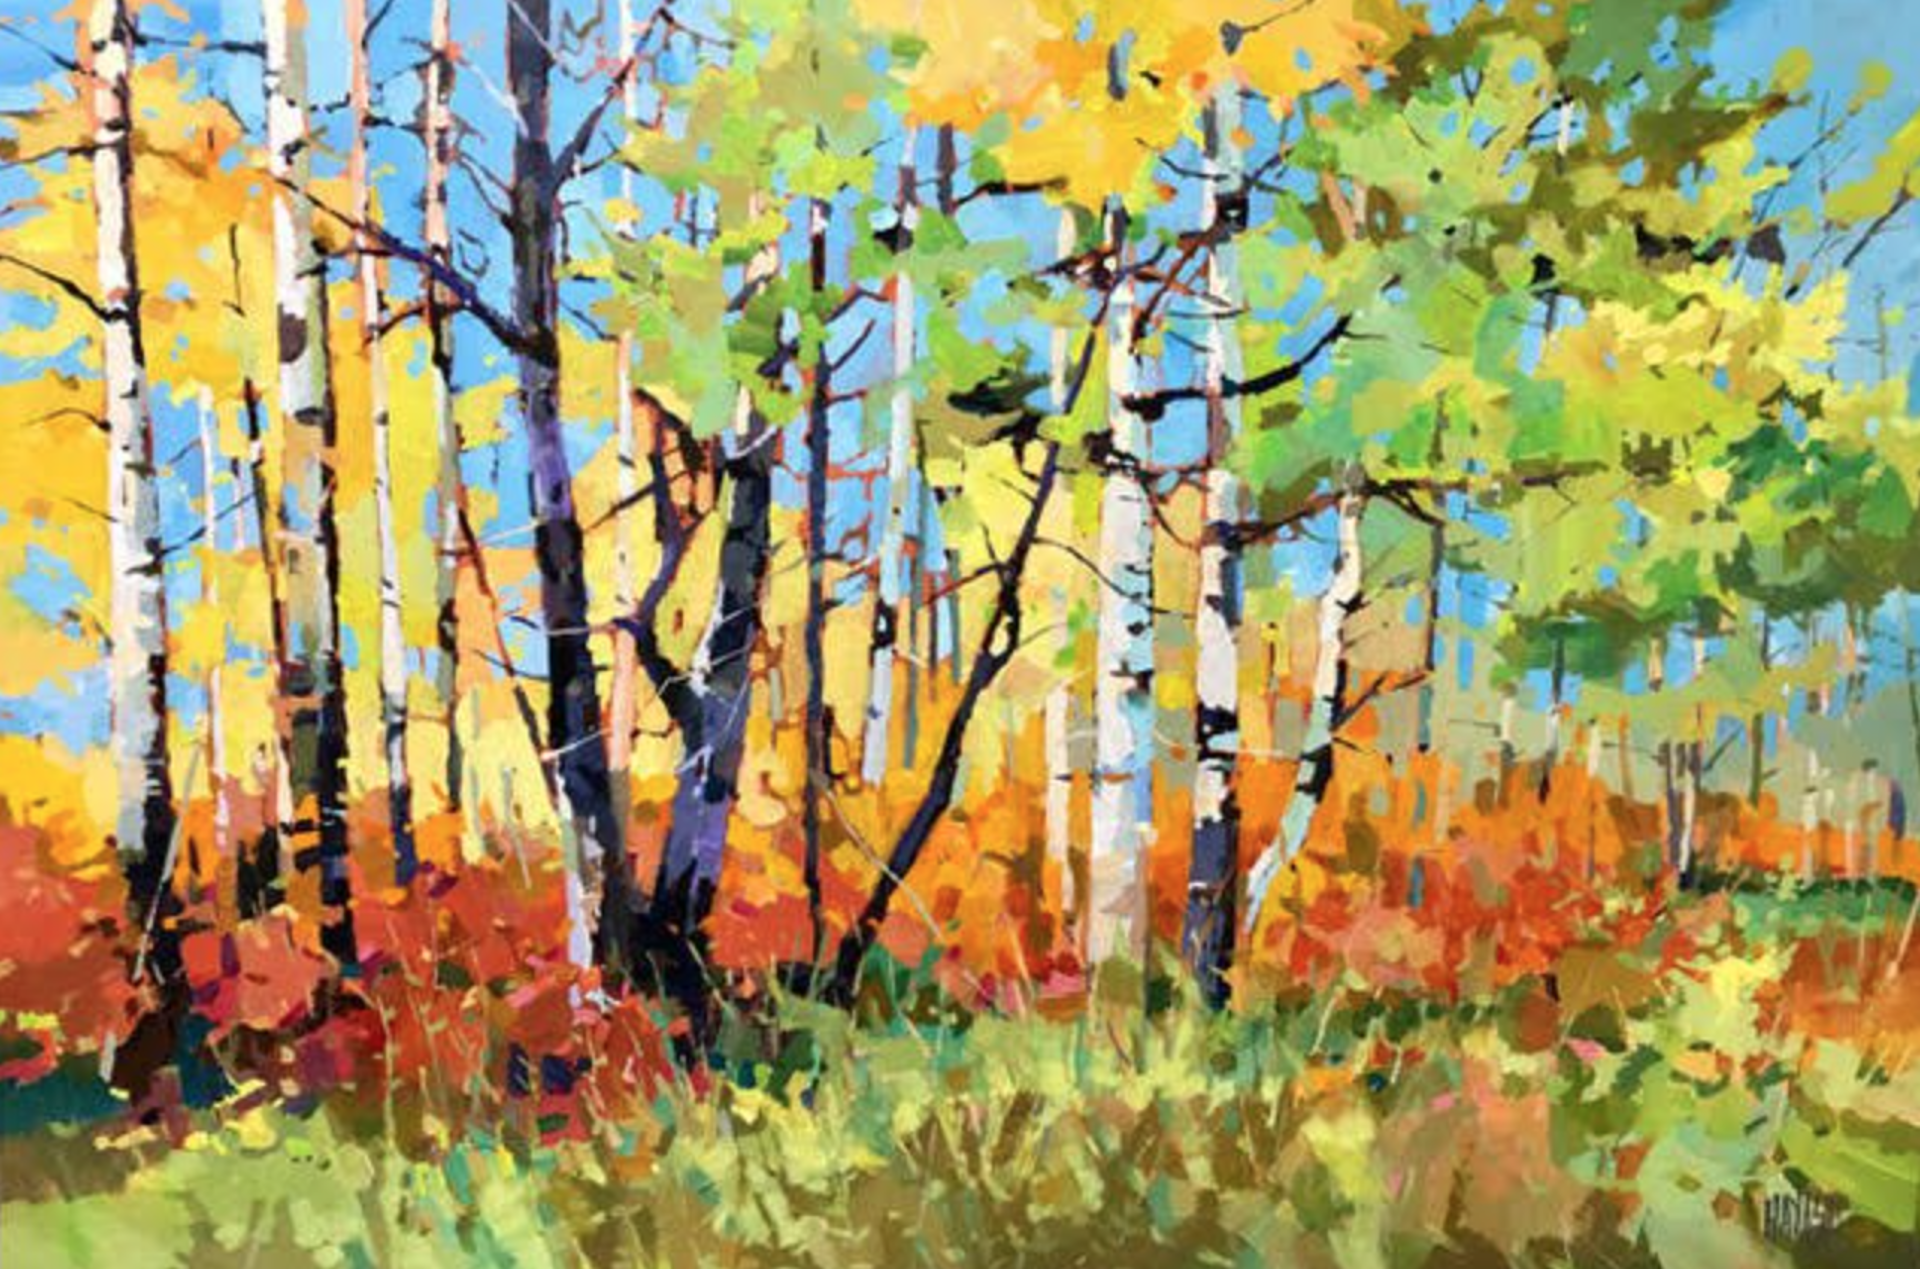 Edge of Autumn by Randy Hayashi